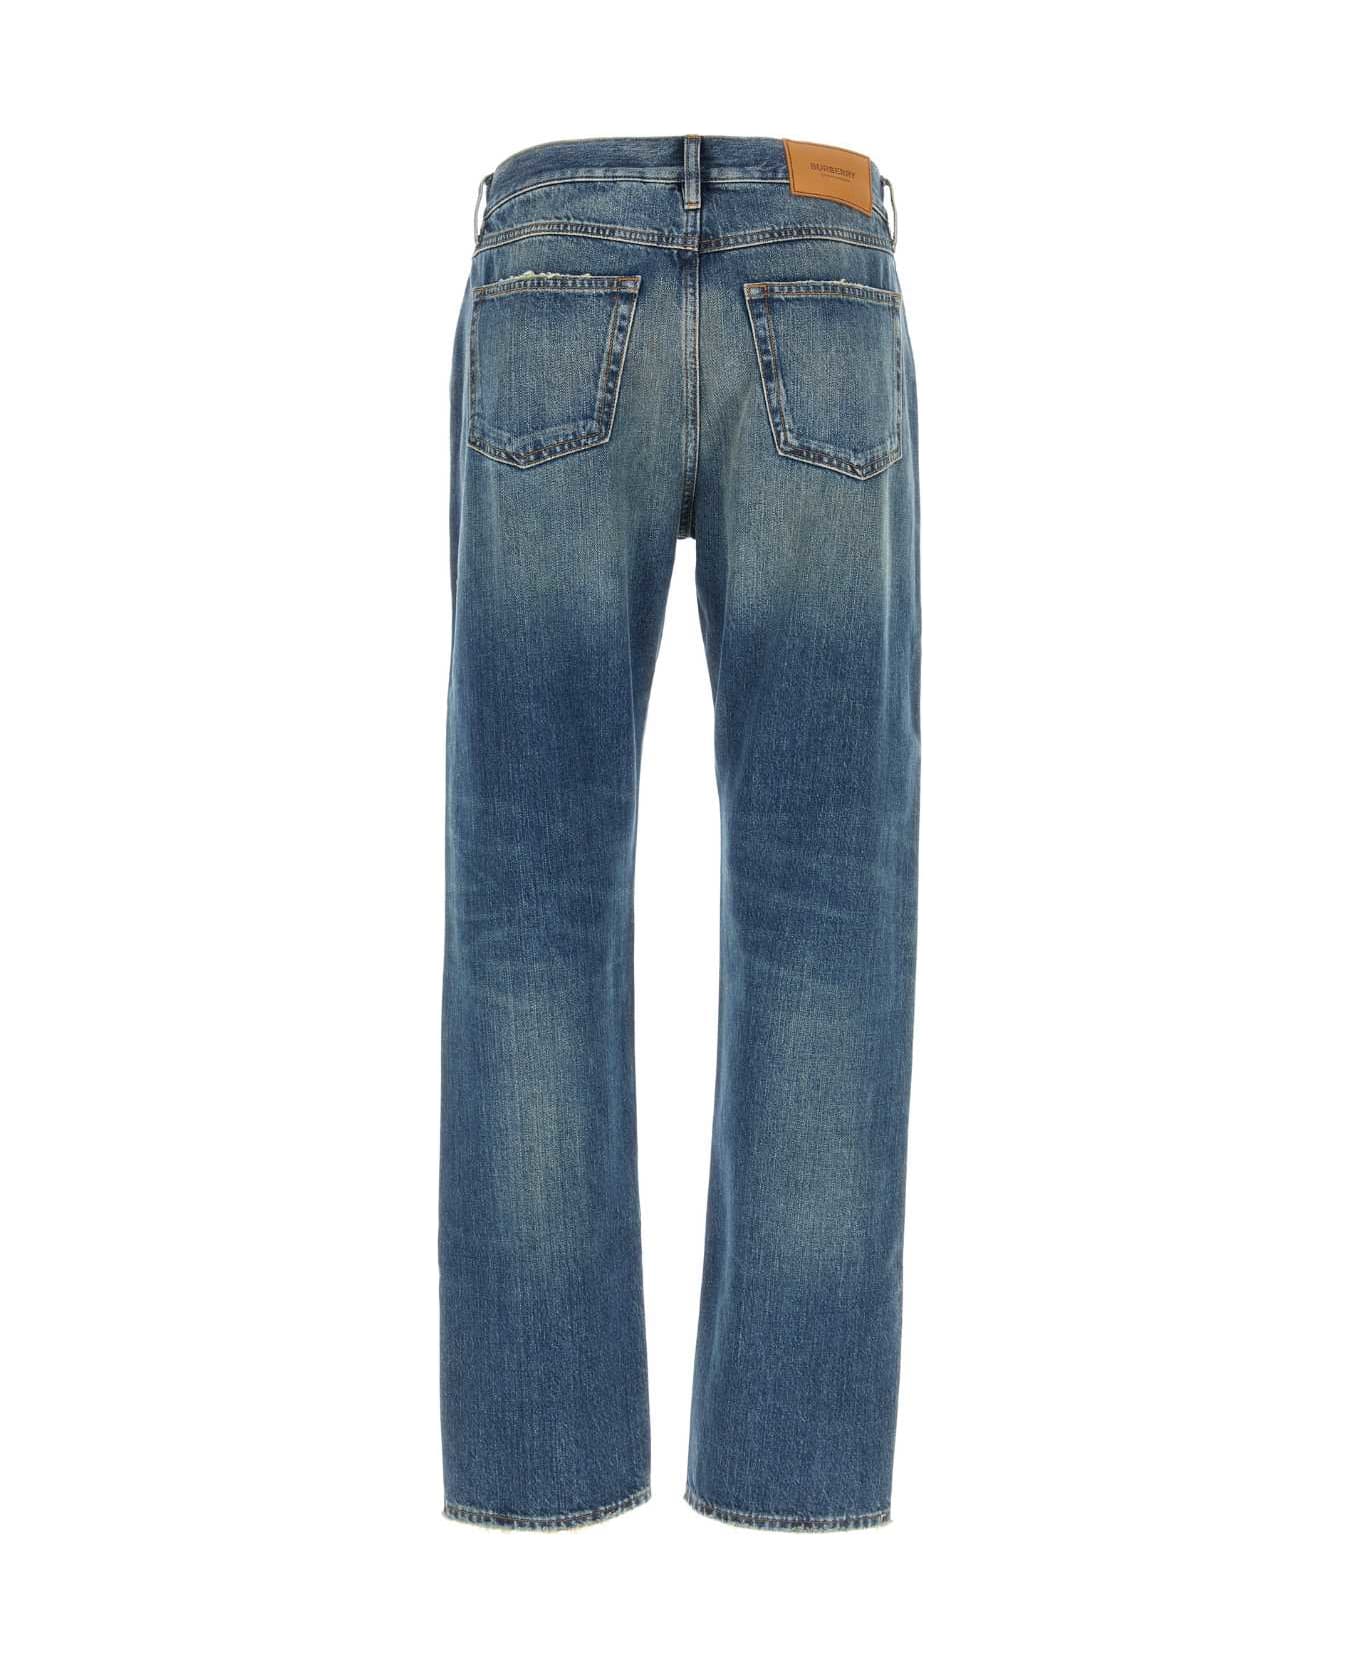 Burberry Denim Jeans - VINTAGEDENIM デニム